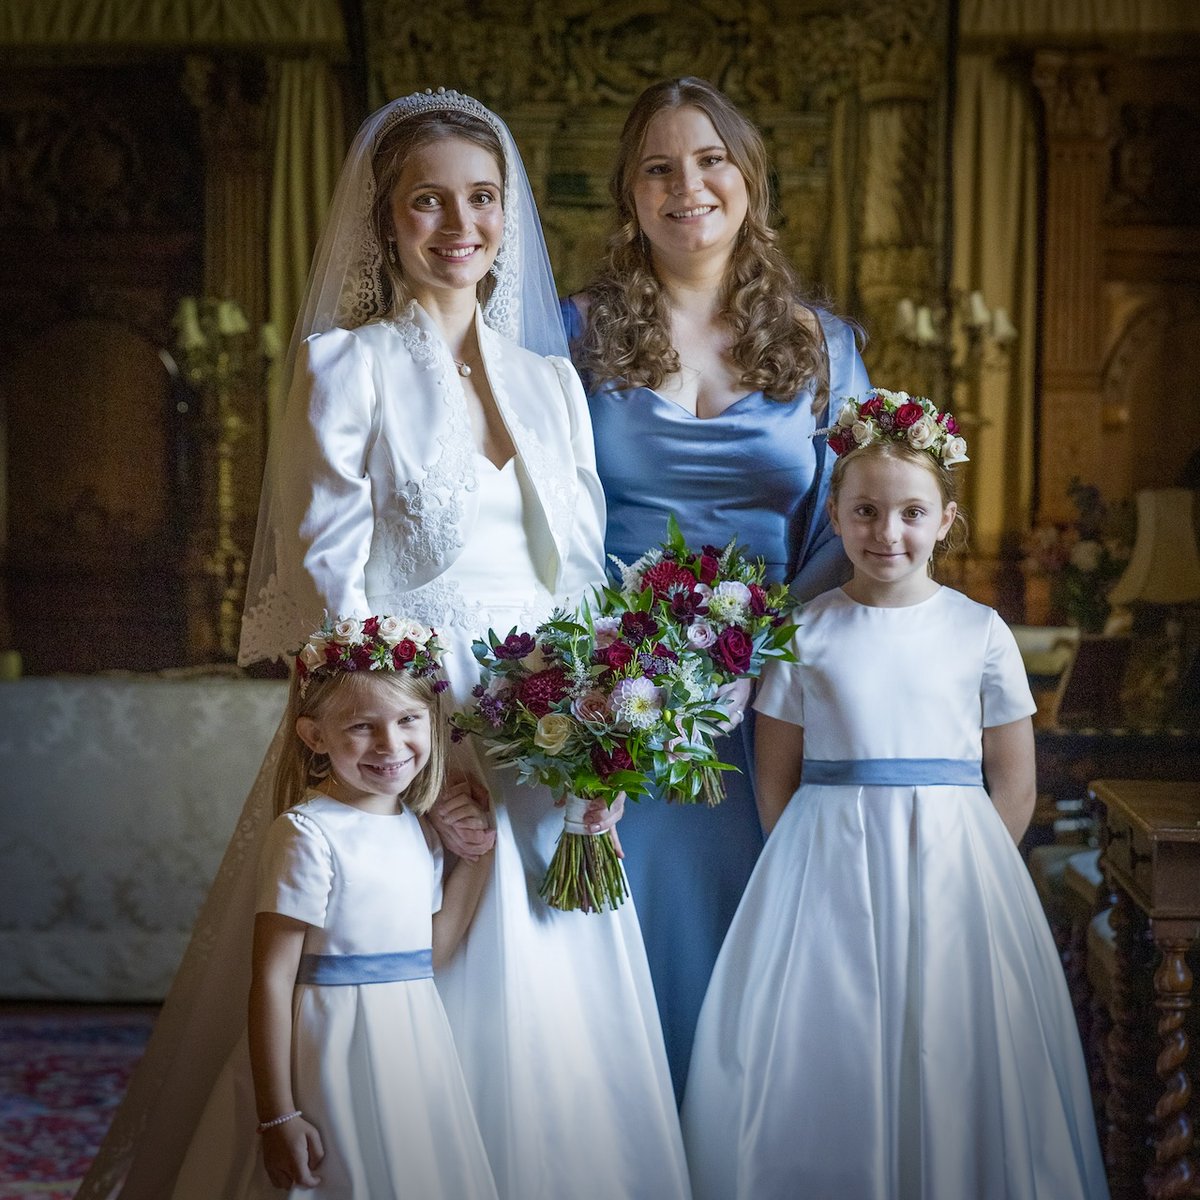 The Bridal Team 👰
#WeddingCeremony #CeremonyFlowers #WeddingFlowers #WeddingFlorist  #KnebworthHouse #Hertfordshire #HemelHempstead #MaplesFlowers

📸 @milliepilkingtonphotography